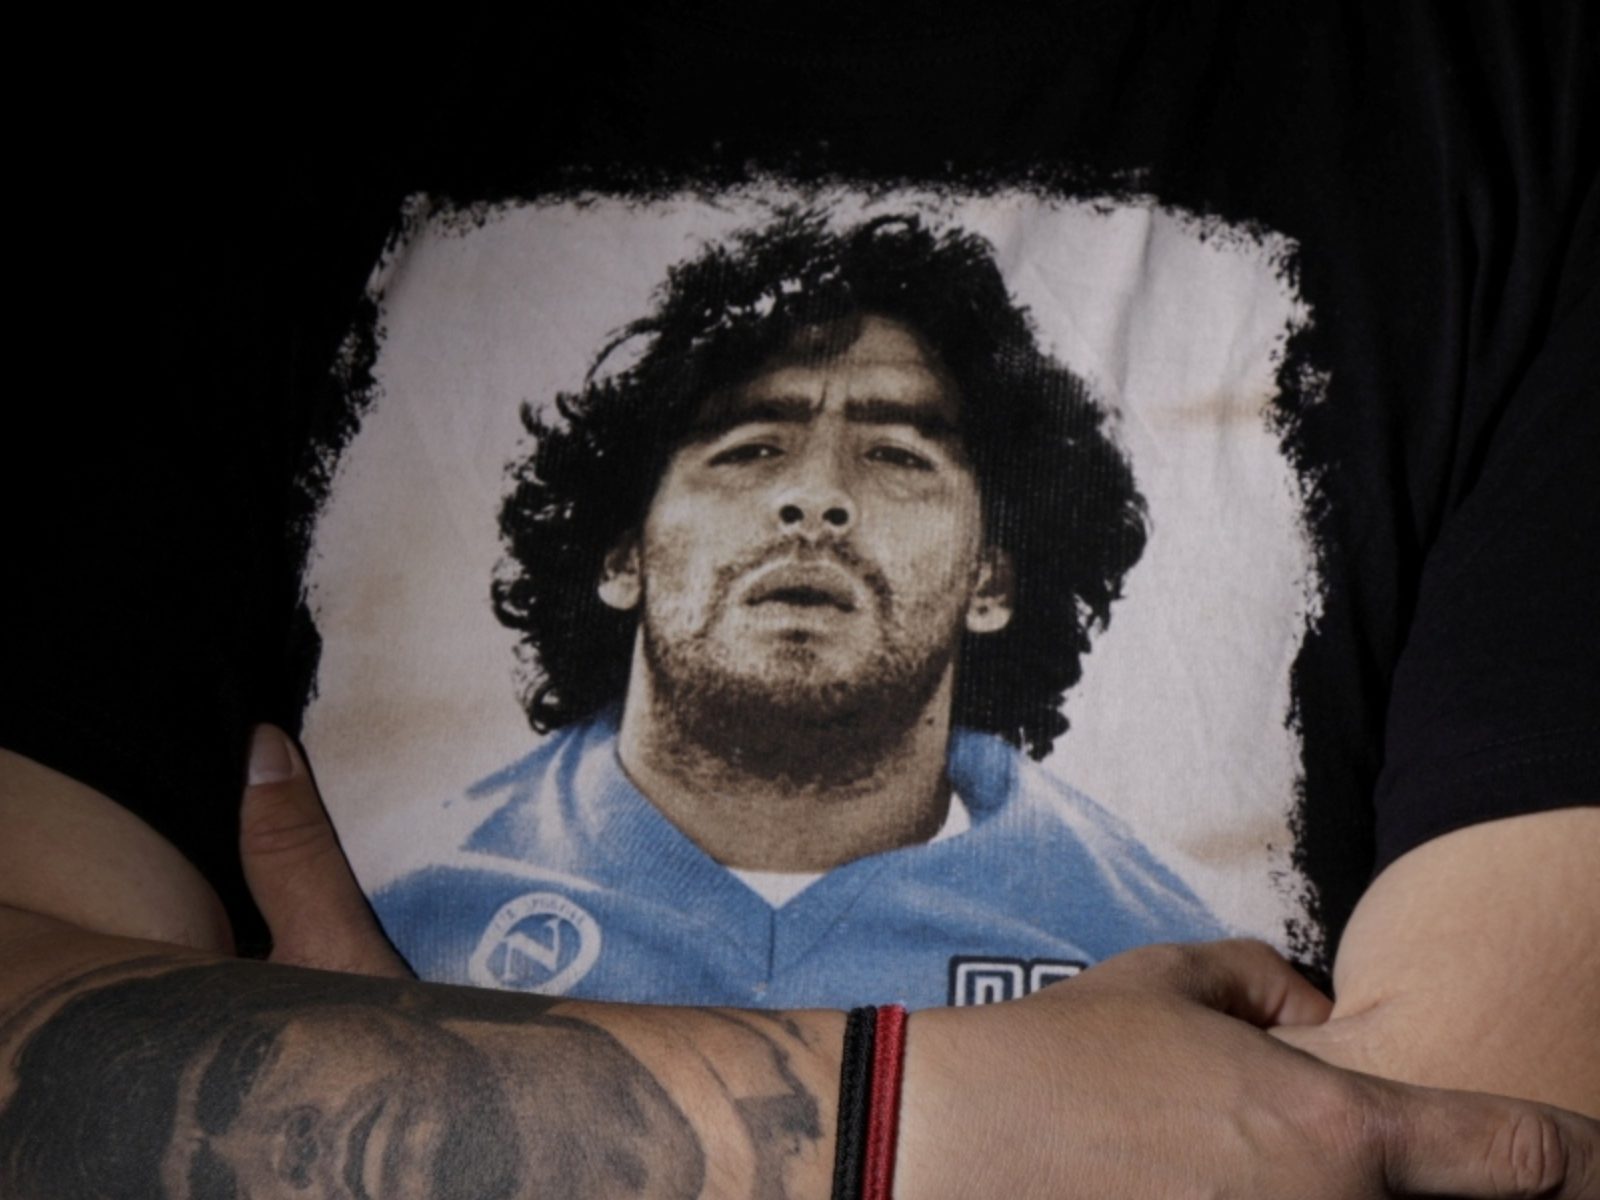 Friends forever': Pele remembers Maradona